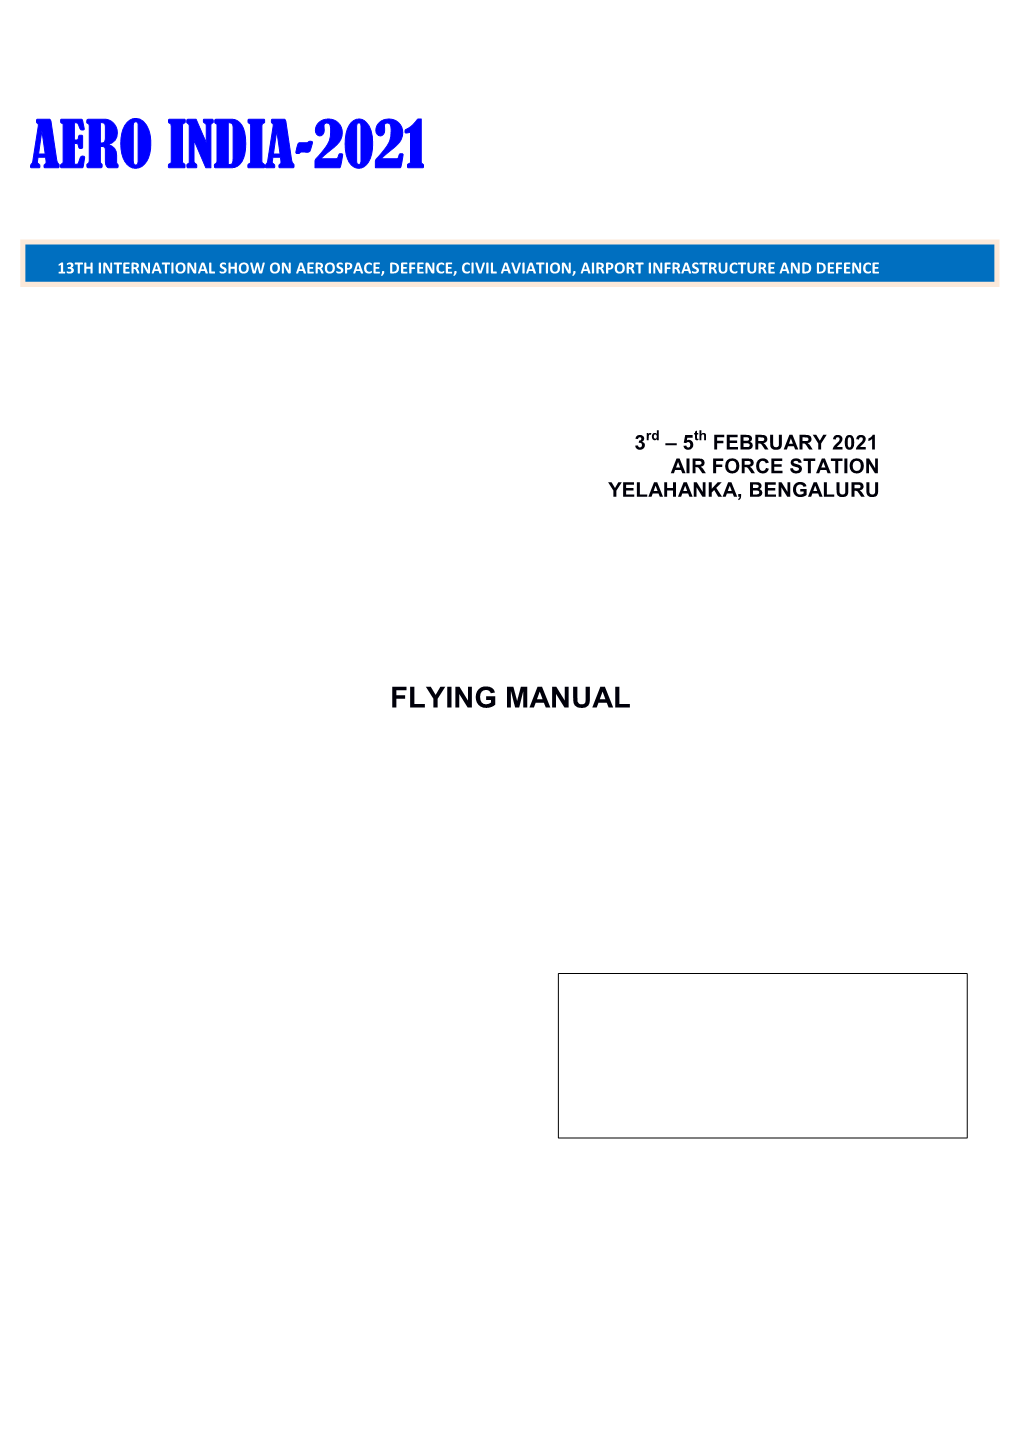 Flying Manual